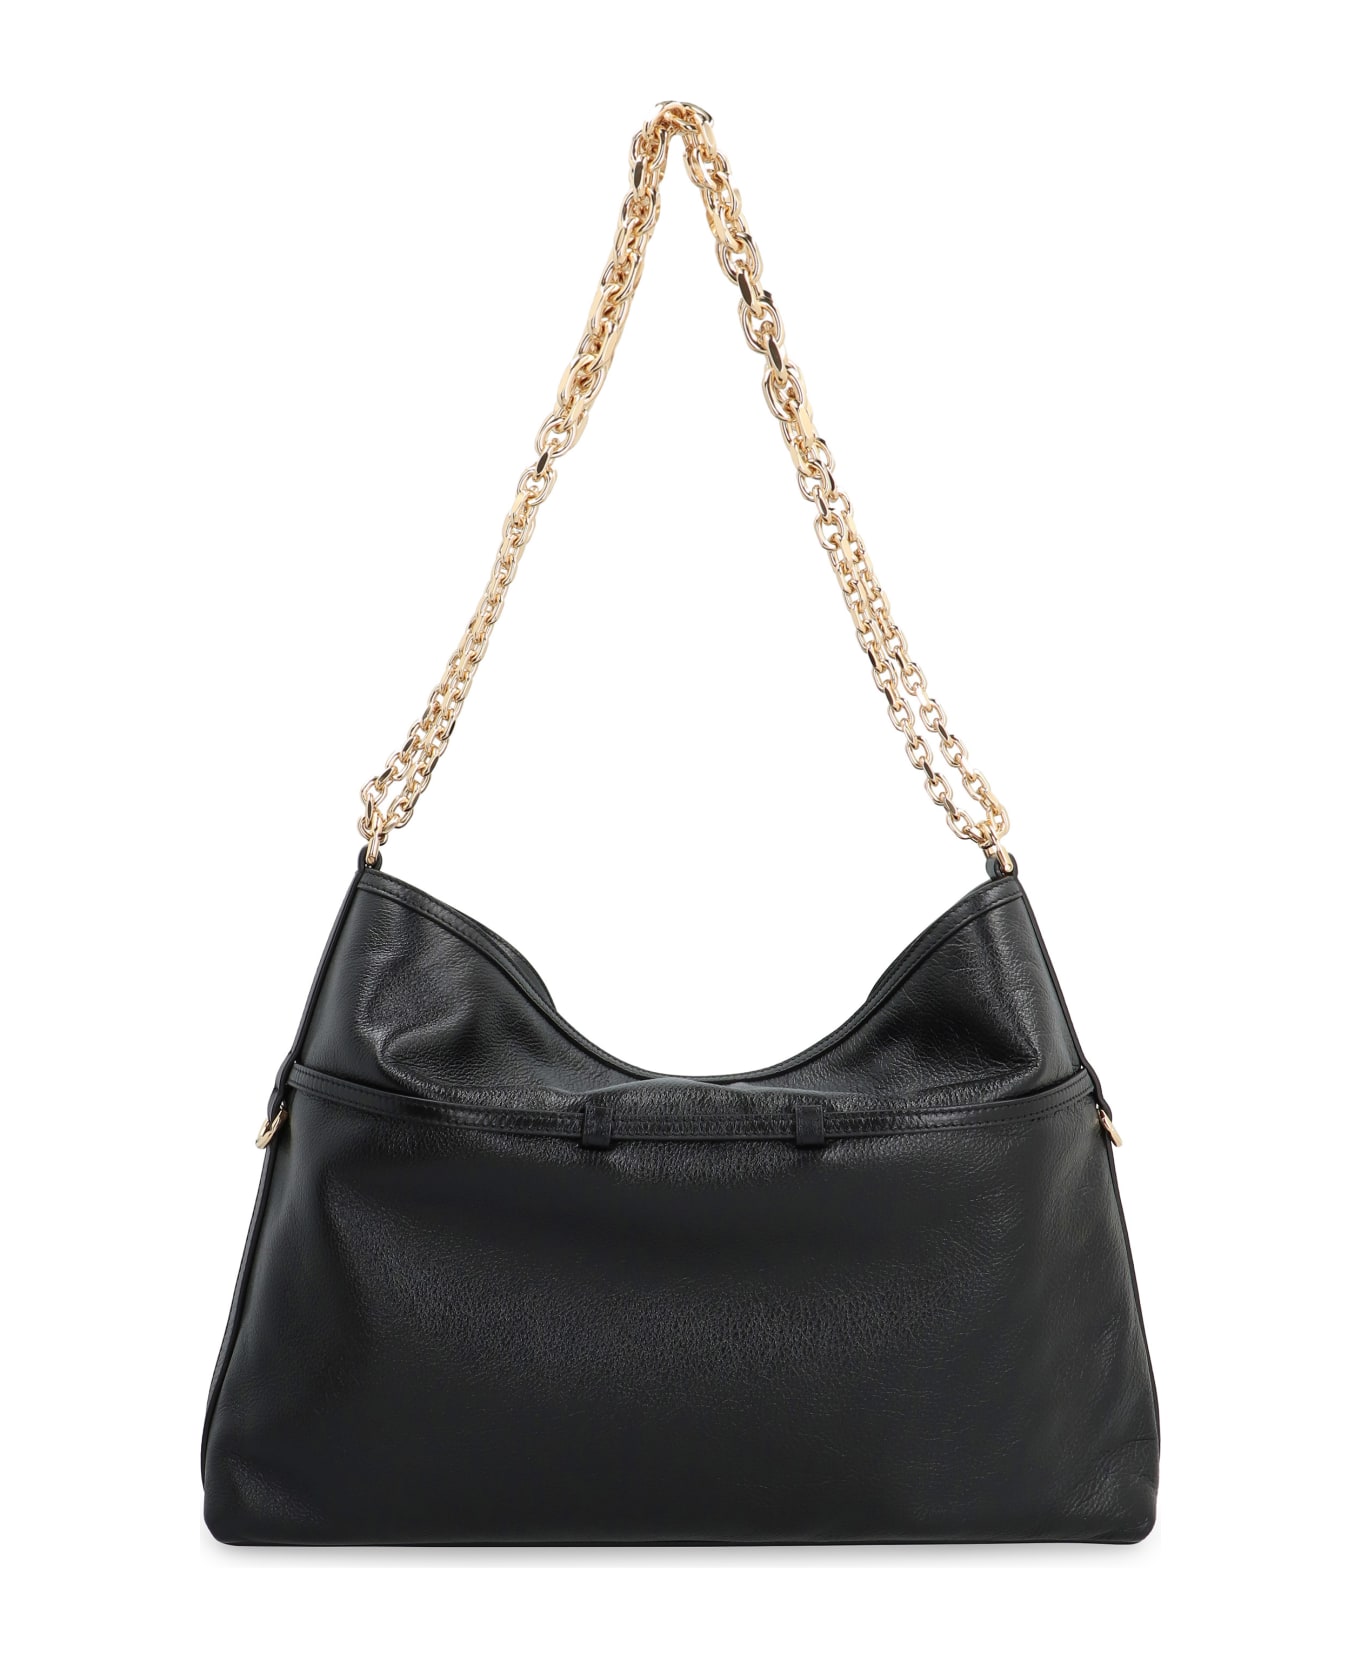 Givenchy Voyou Chain Leather Shoulder Bag - black